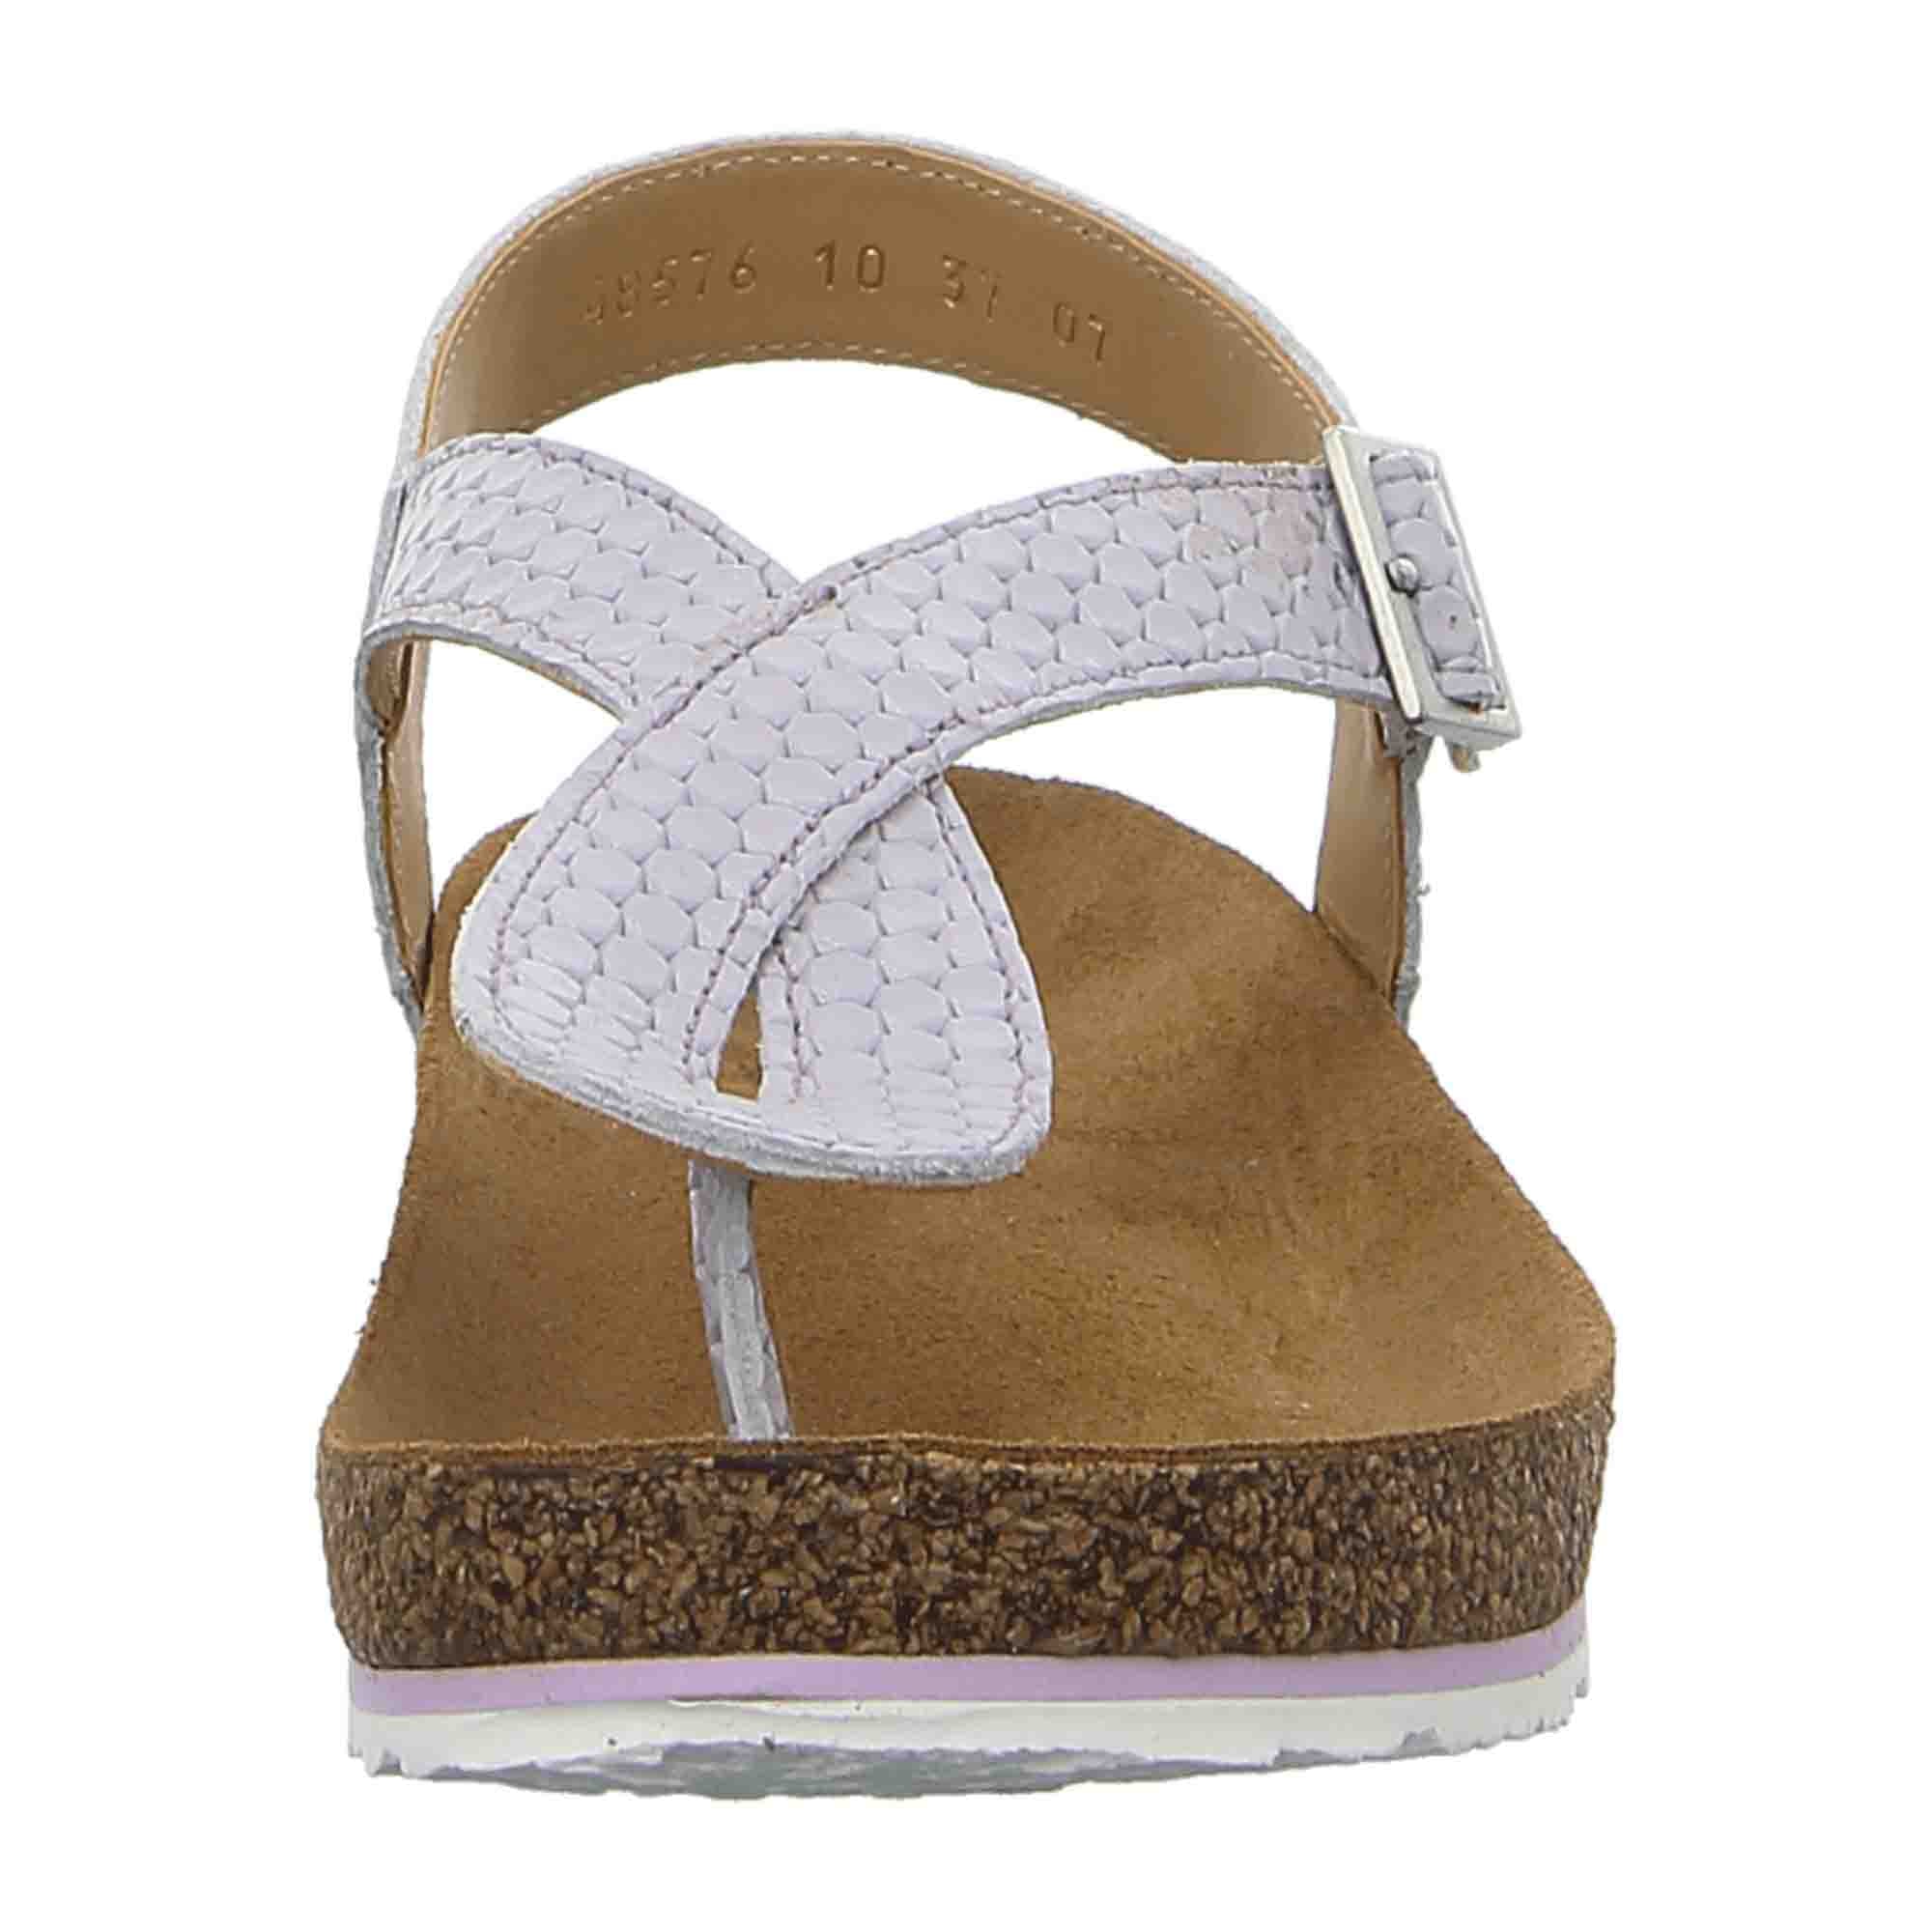 Haflinger Bio Lena Women's Sandals, Sustainable Beige Leather, Comfort & Style